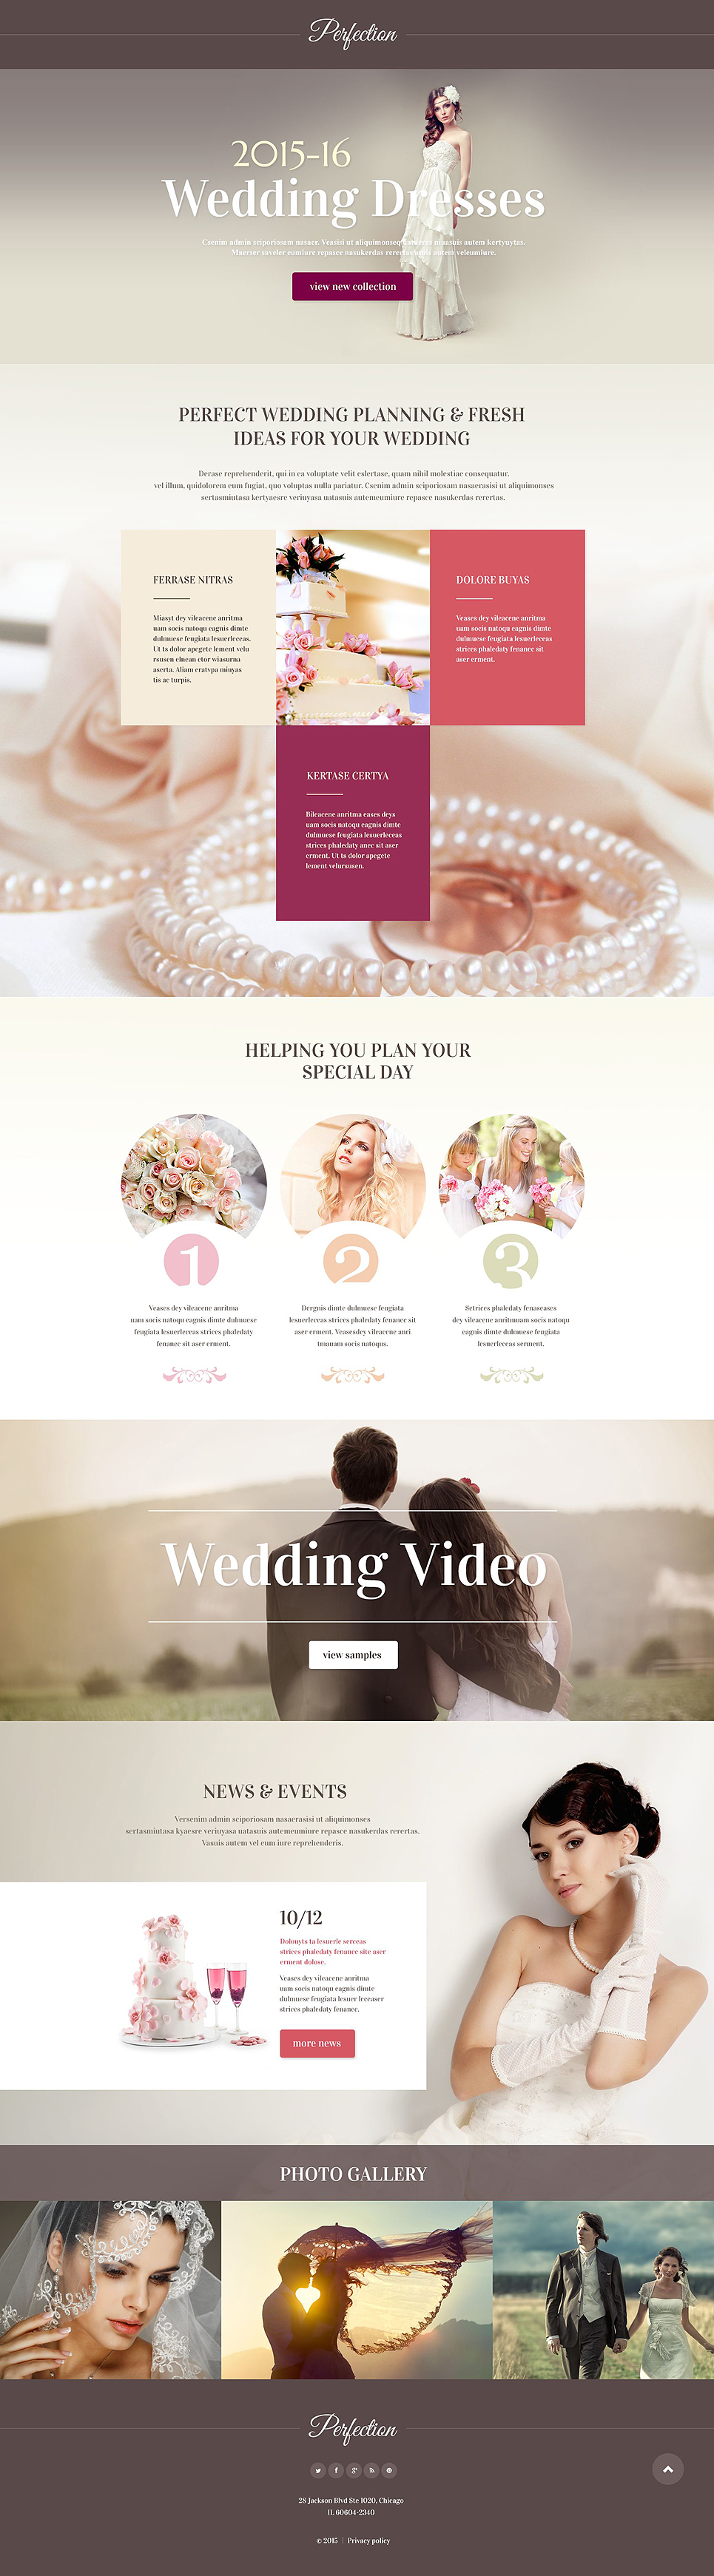 Wedding Venues Responsive Landing Page Template New Screenshots BIG